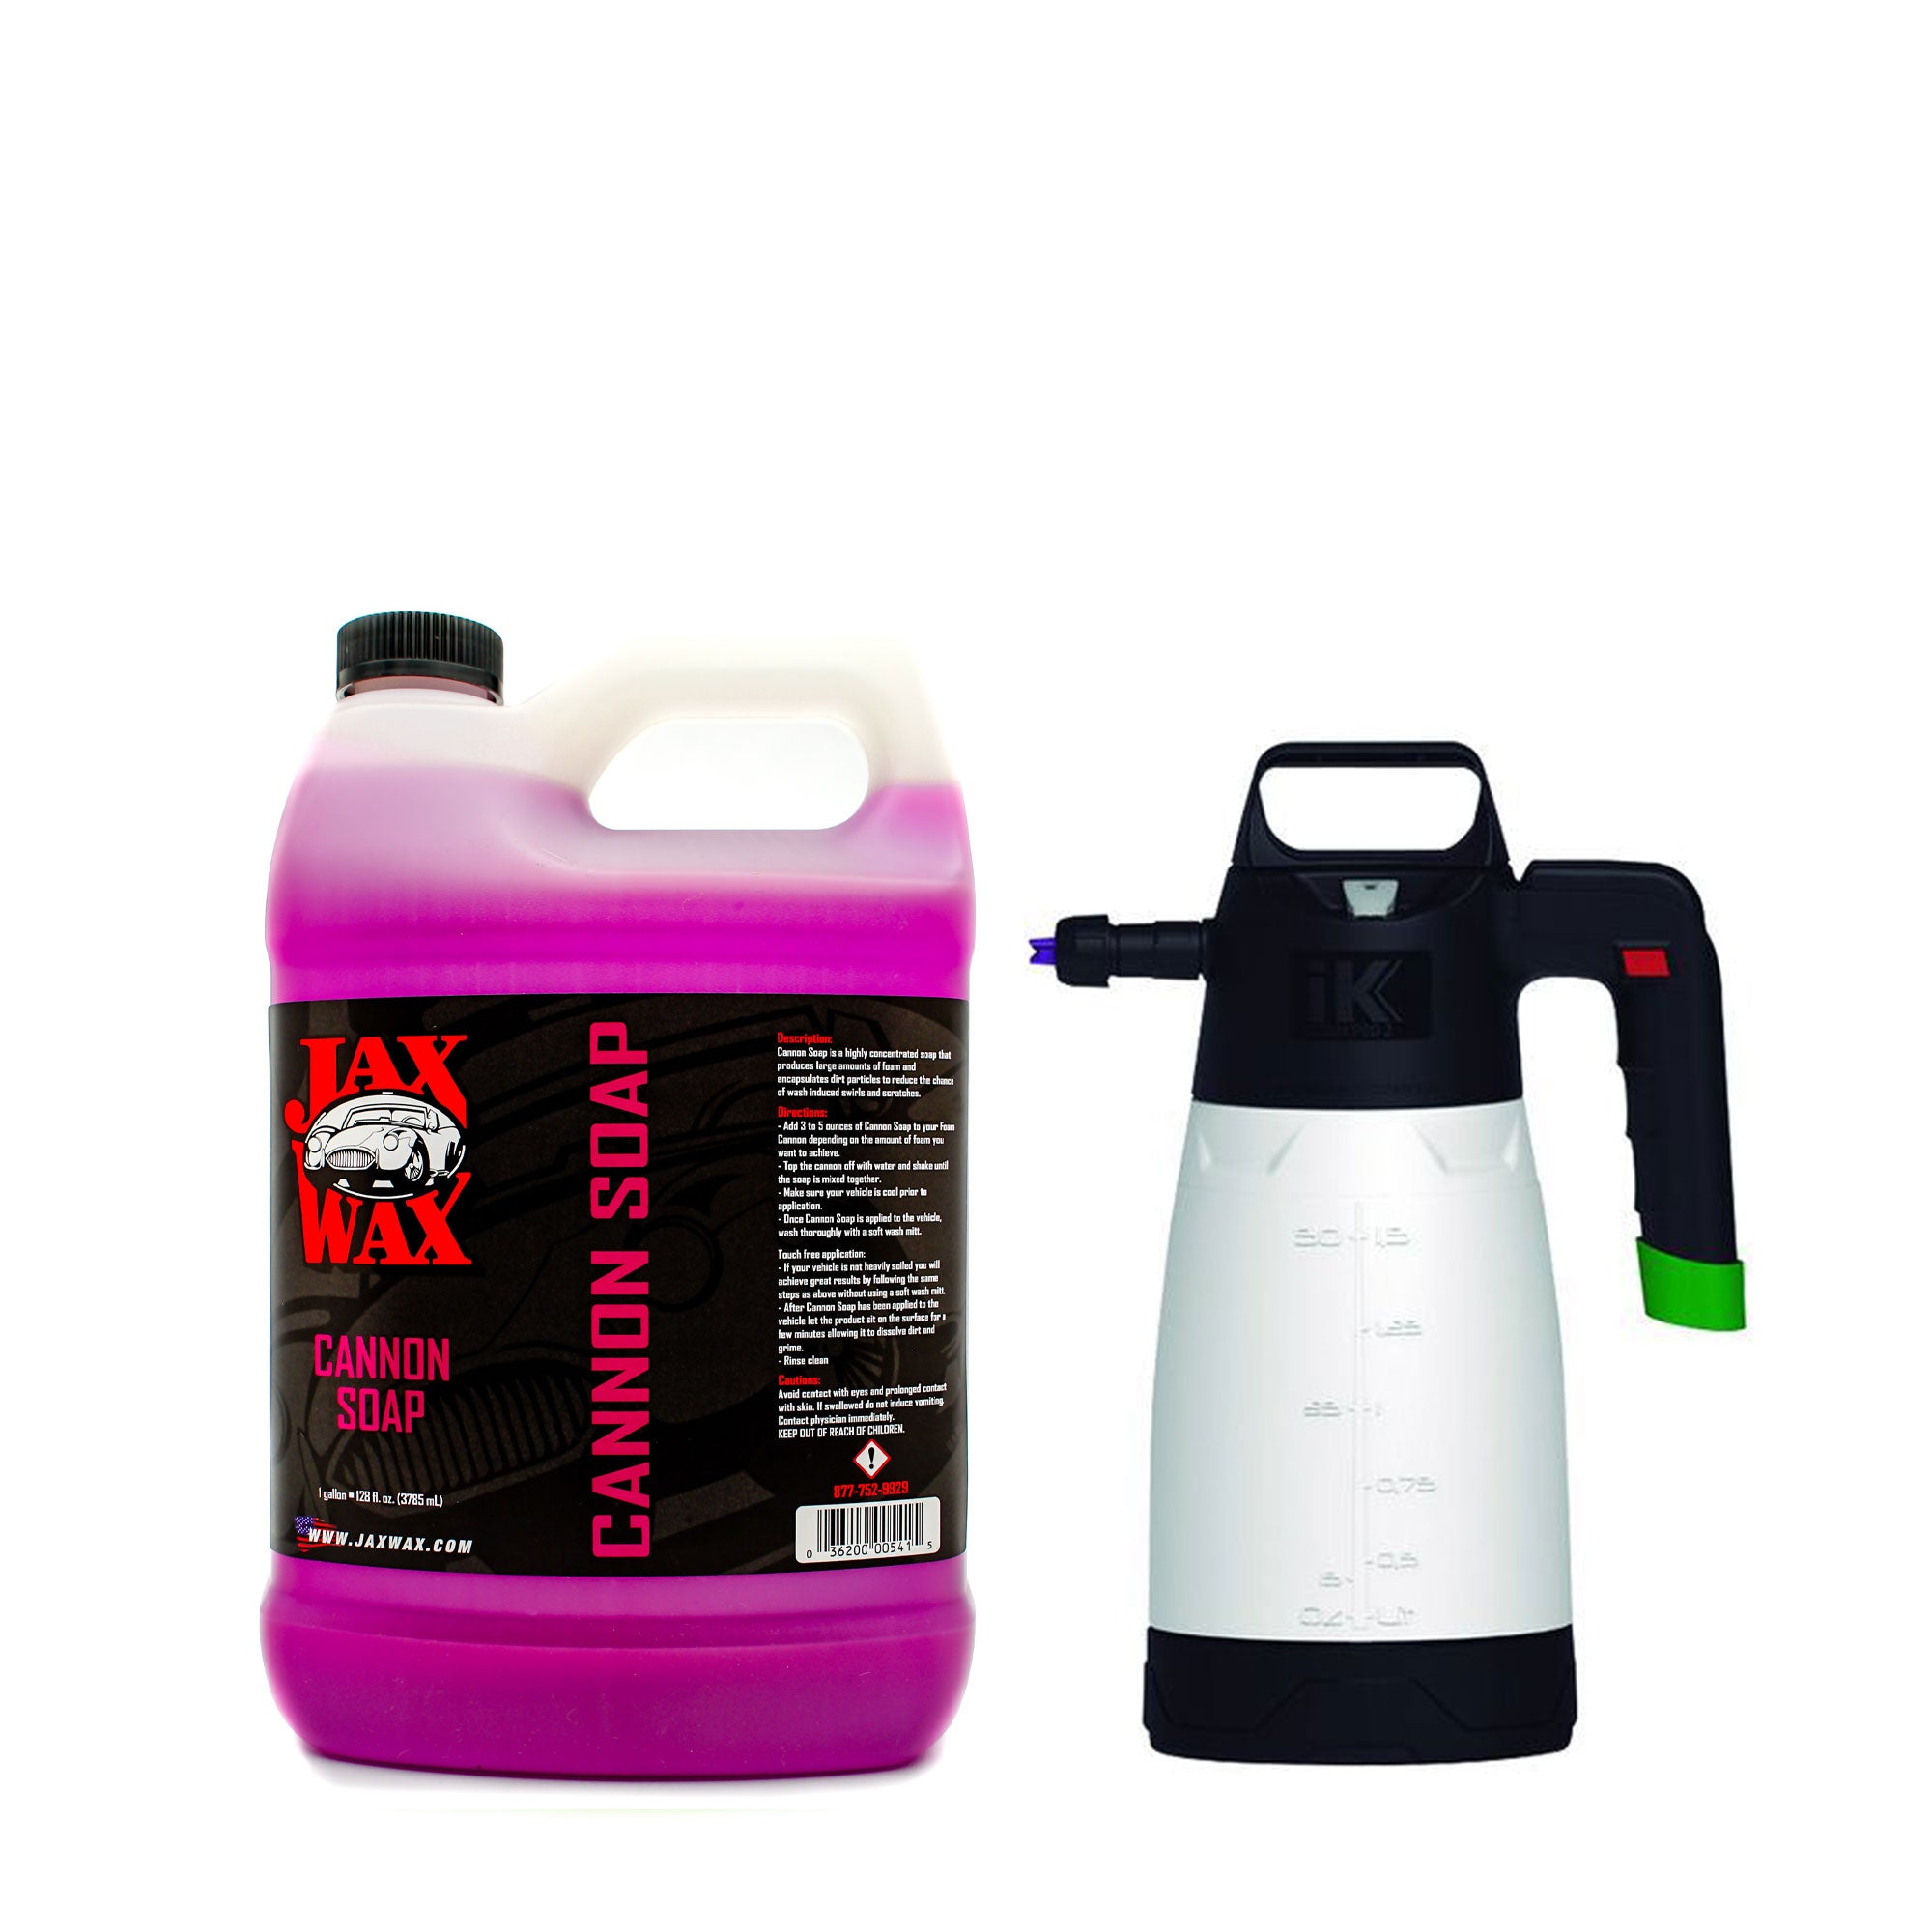 JDAG Car Products 2L Foam Sprayer Auto Detailing Foam Soap Sprayer